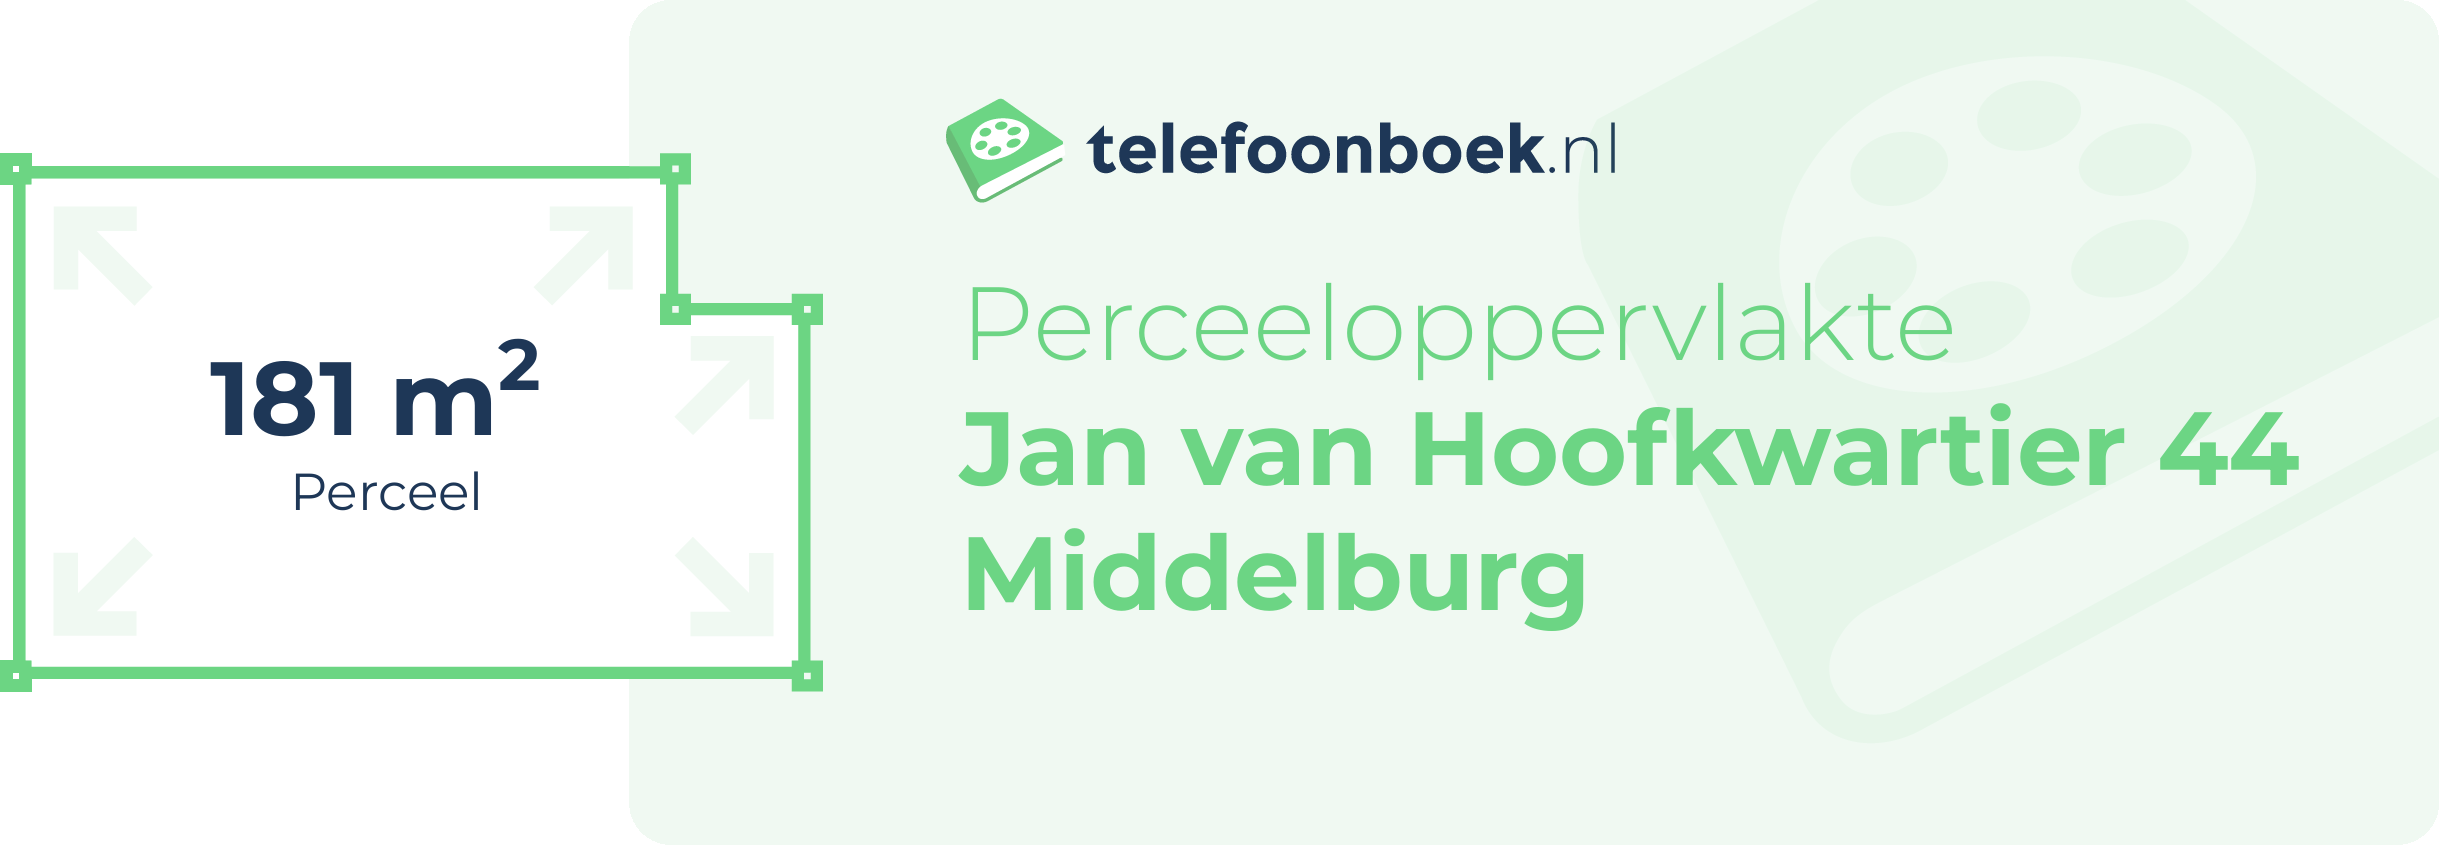 Perceeloppervlakte Jan Van Hoofkwartier 44 Middelburg